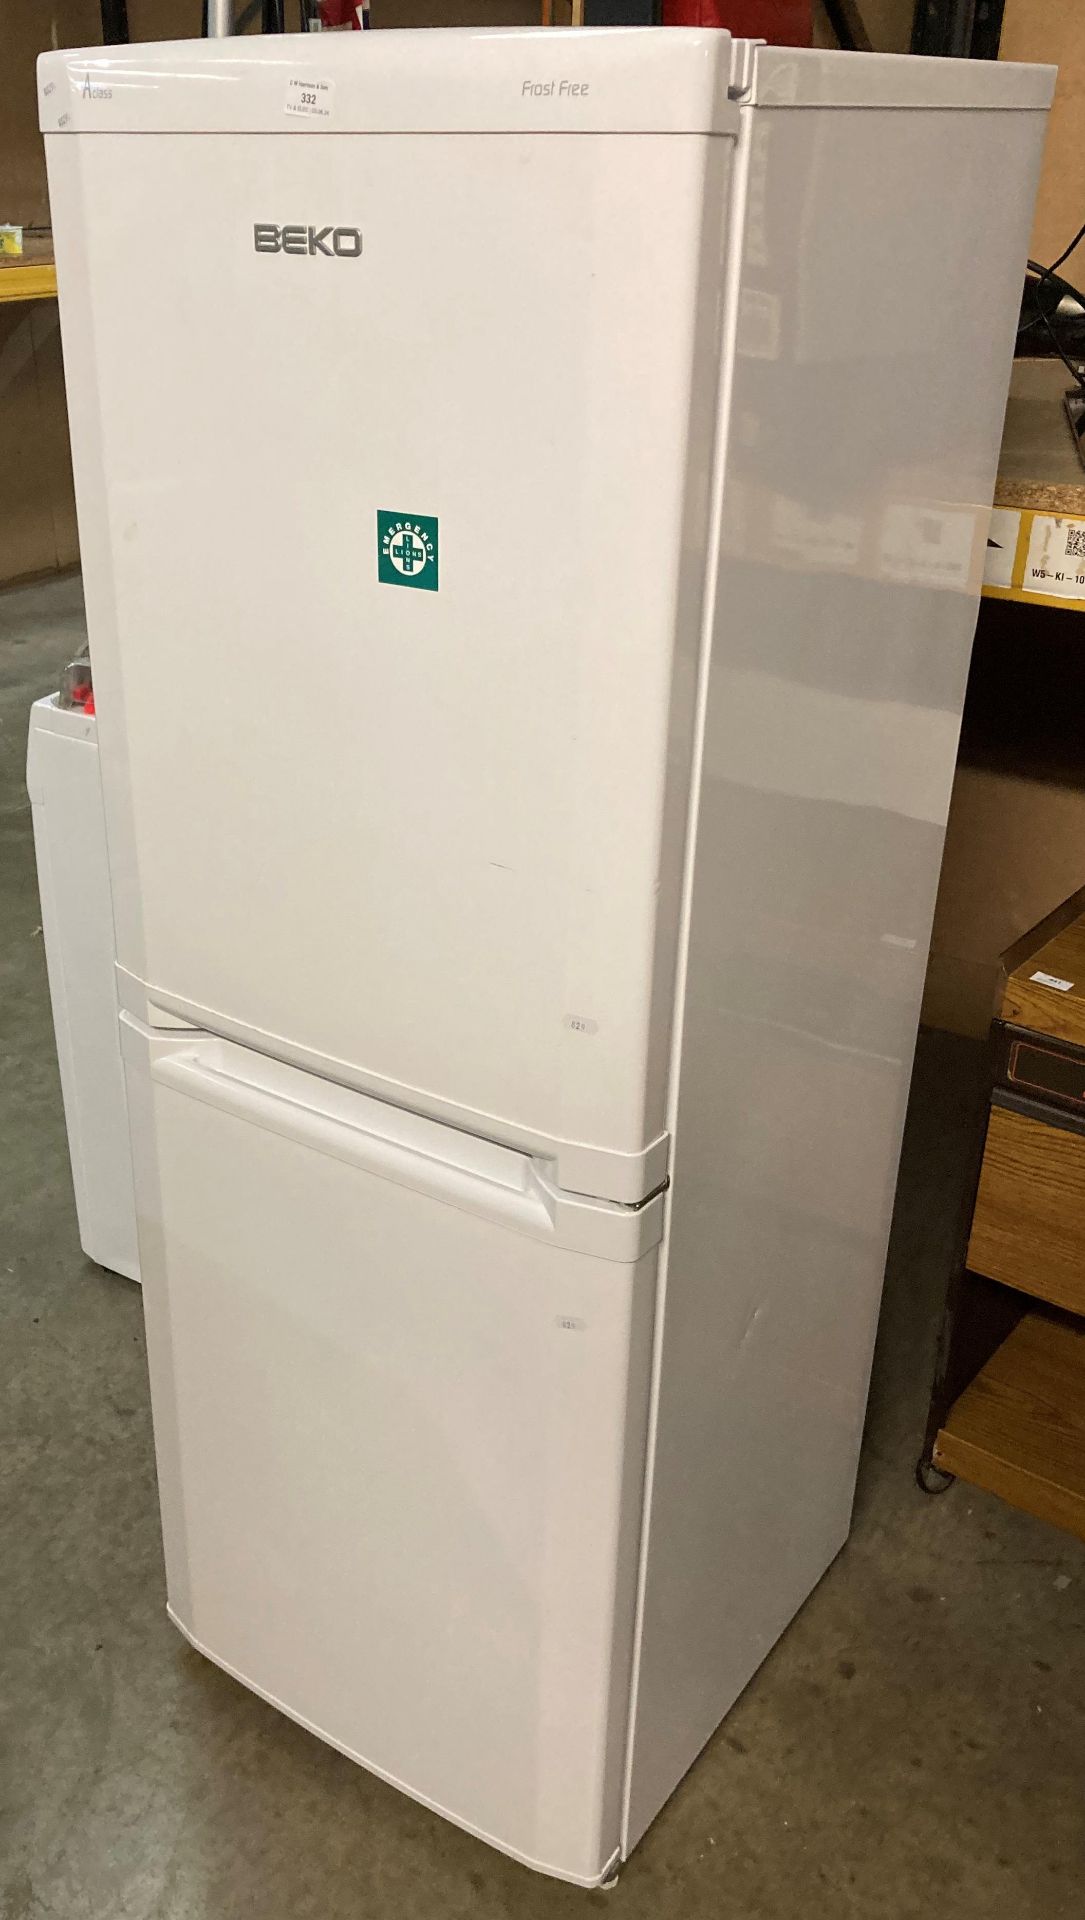 Beko Frost Free A Class fridge freezer (PO)